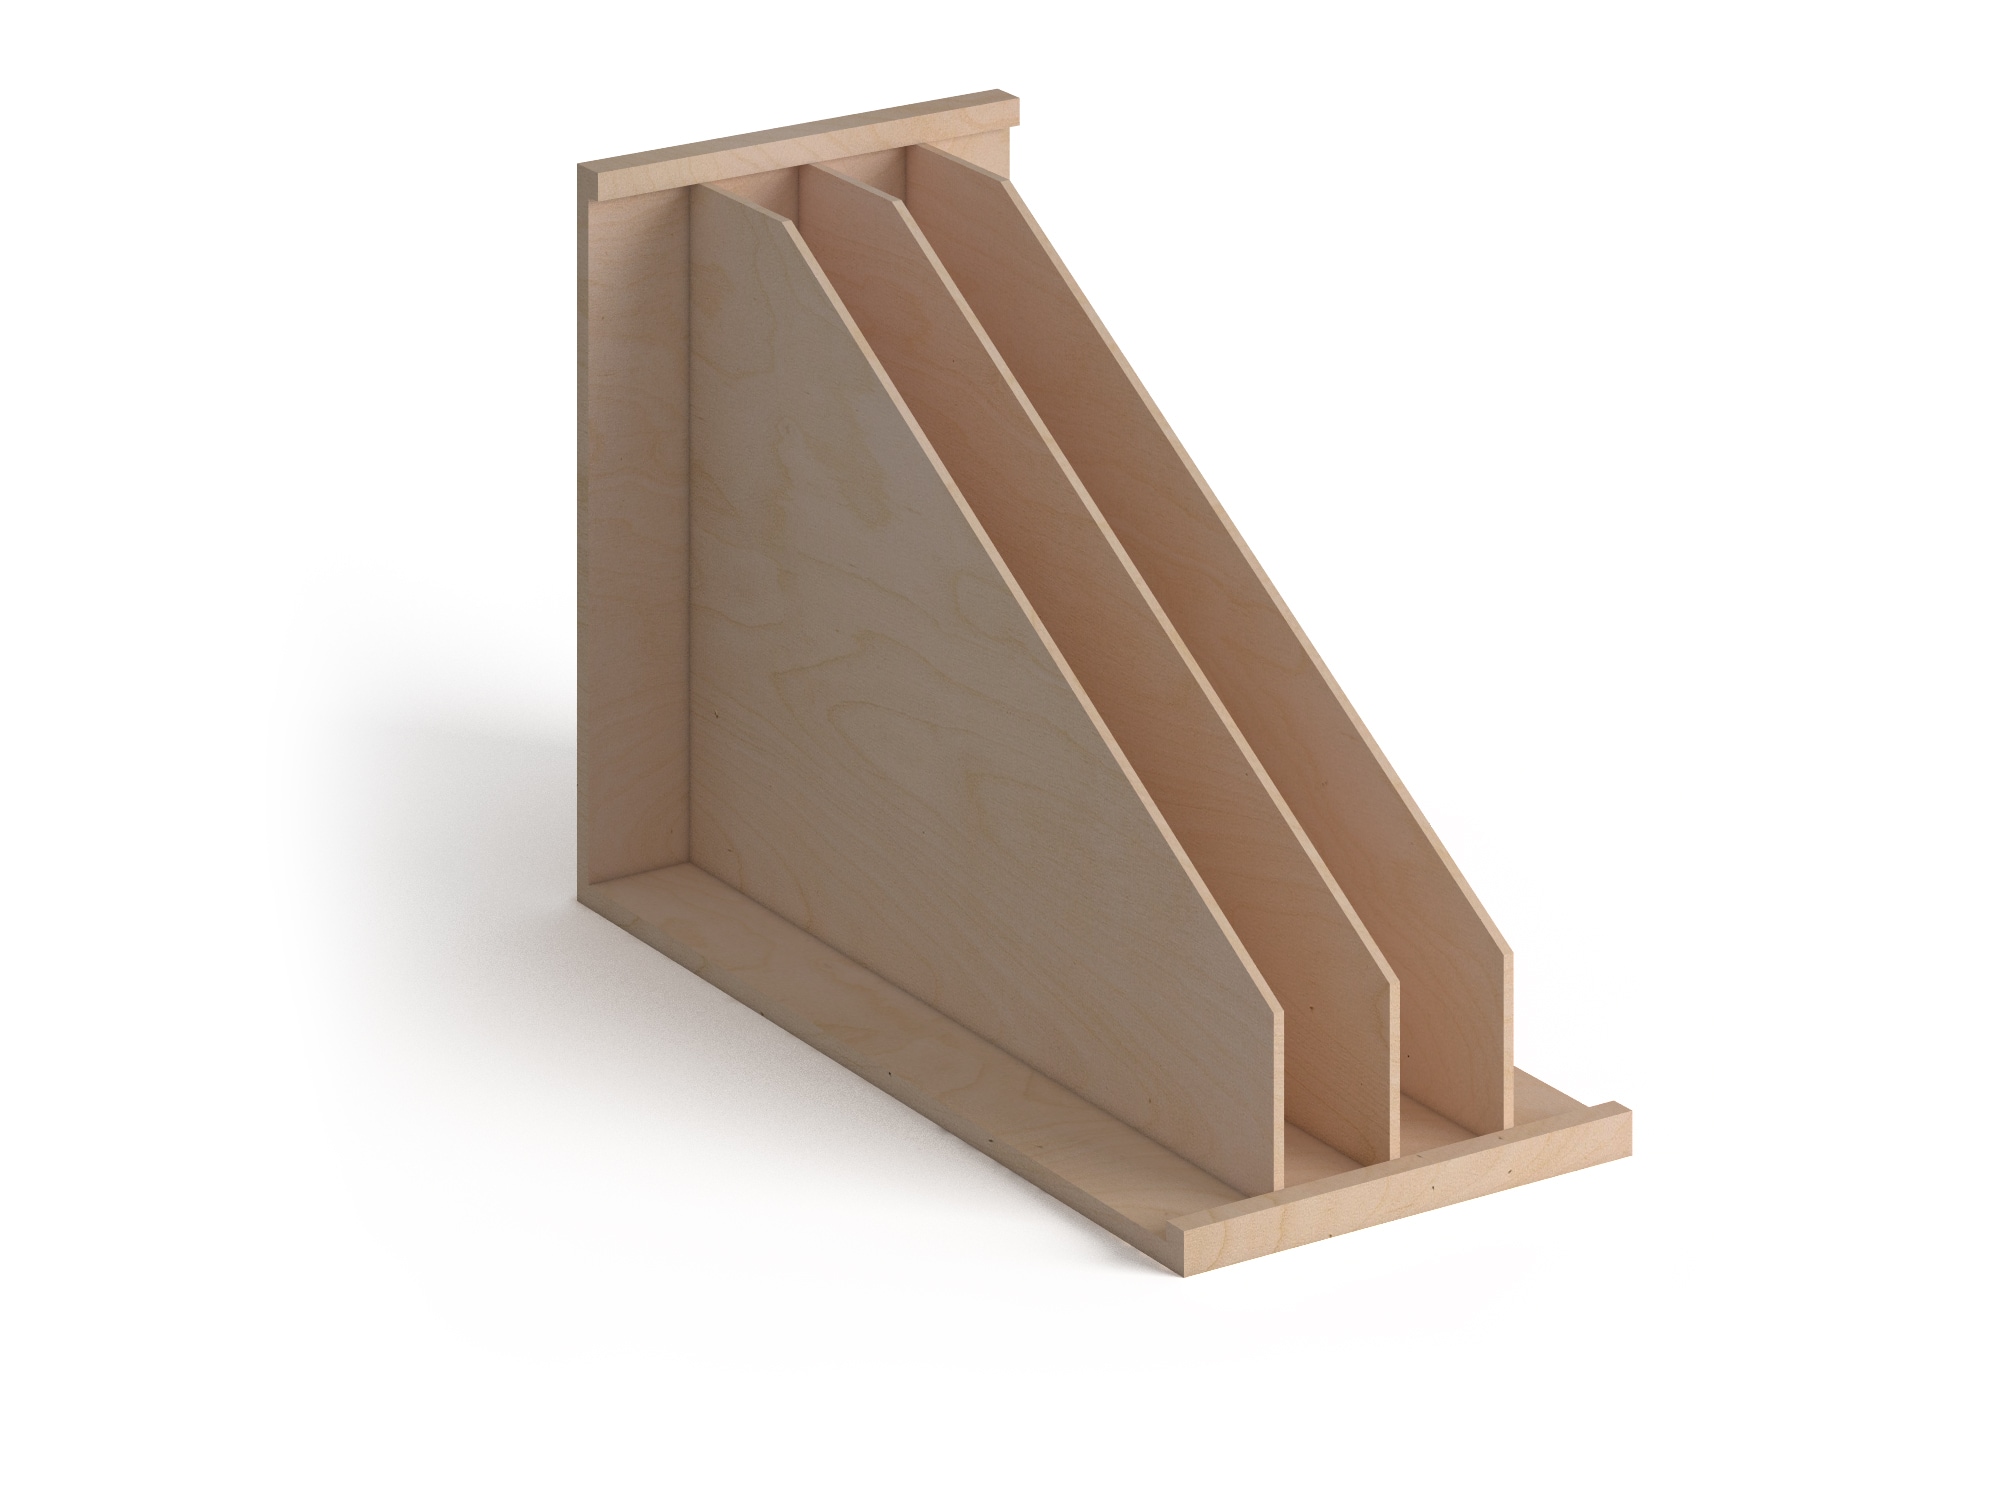 Maple Cabinet Drawer Box